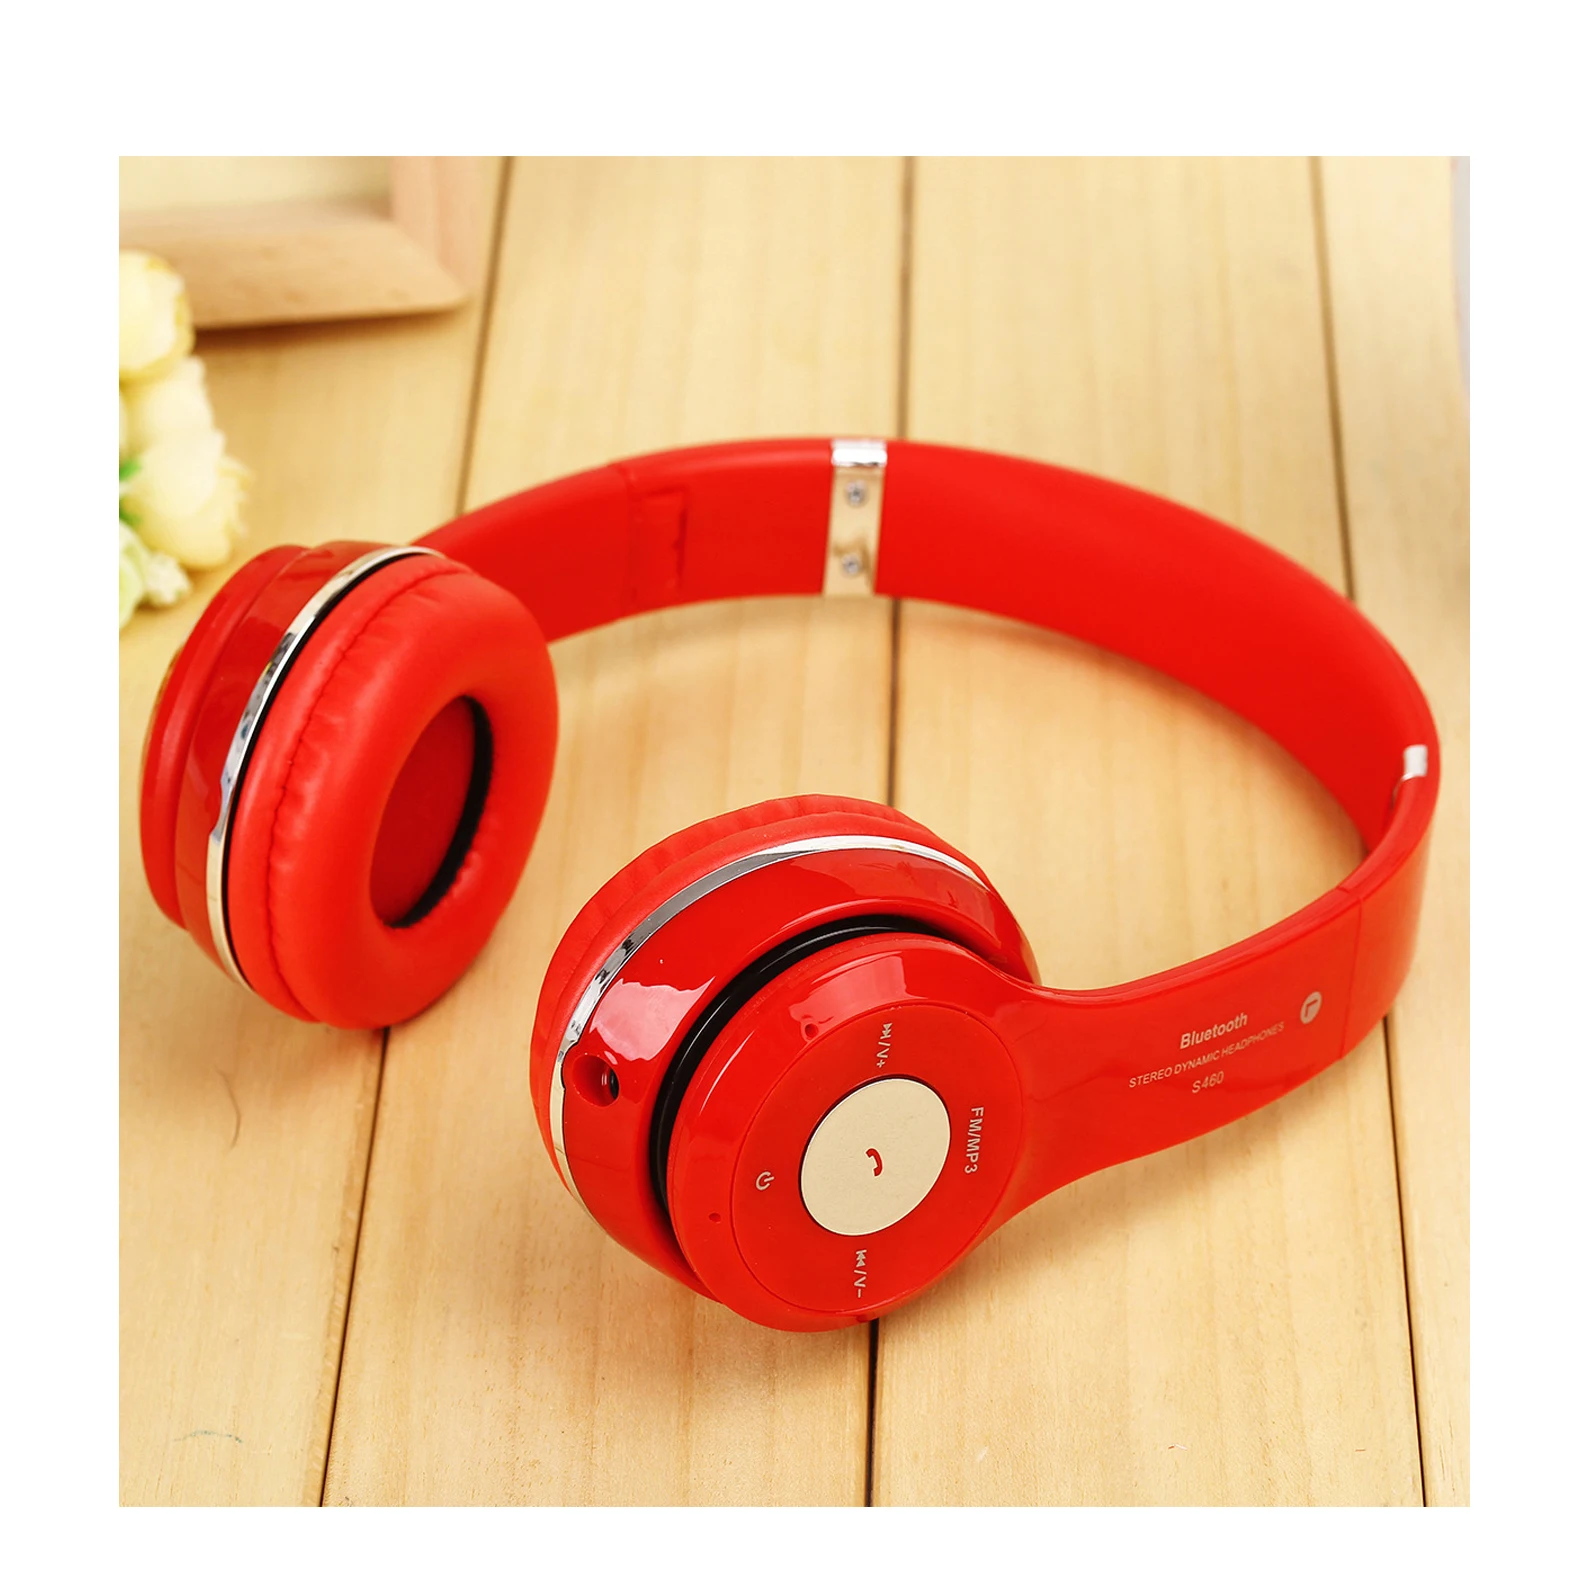 FB-S460 ANC noise cancelling video songs SHM7110U Red headset earphone wireless headphones